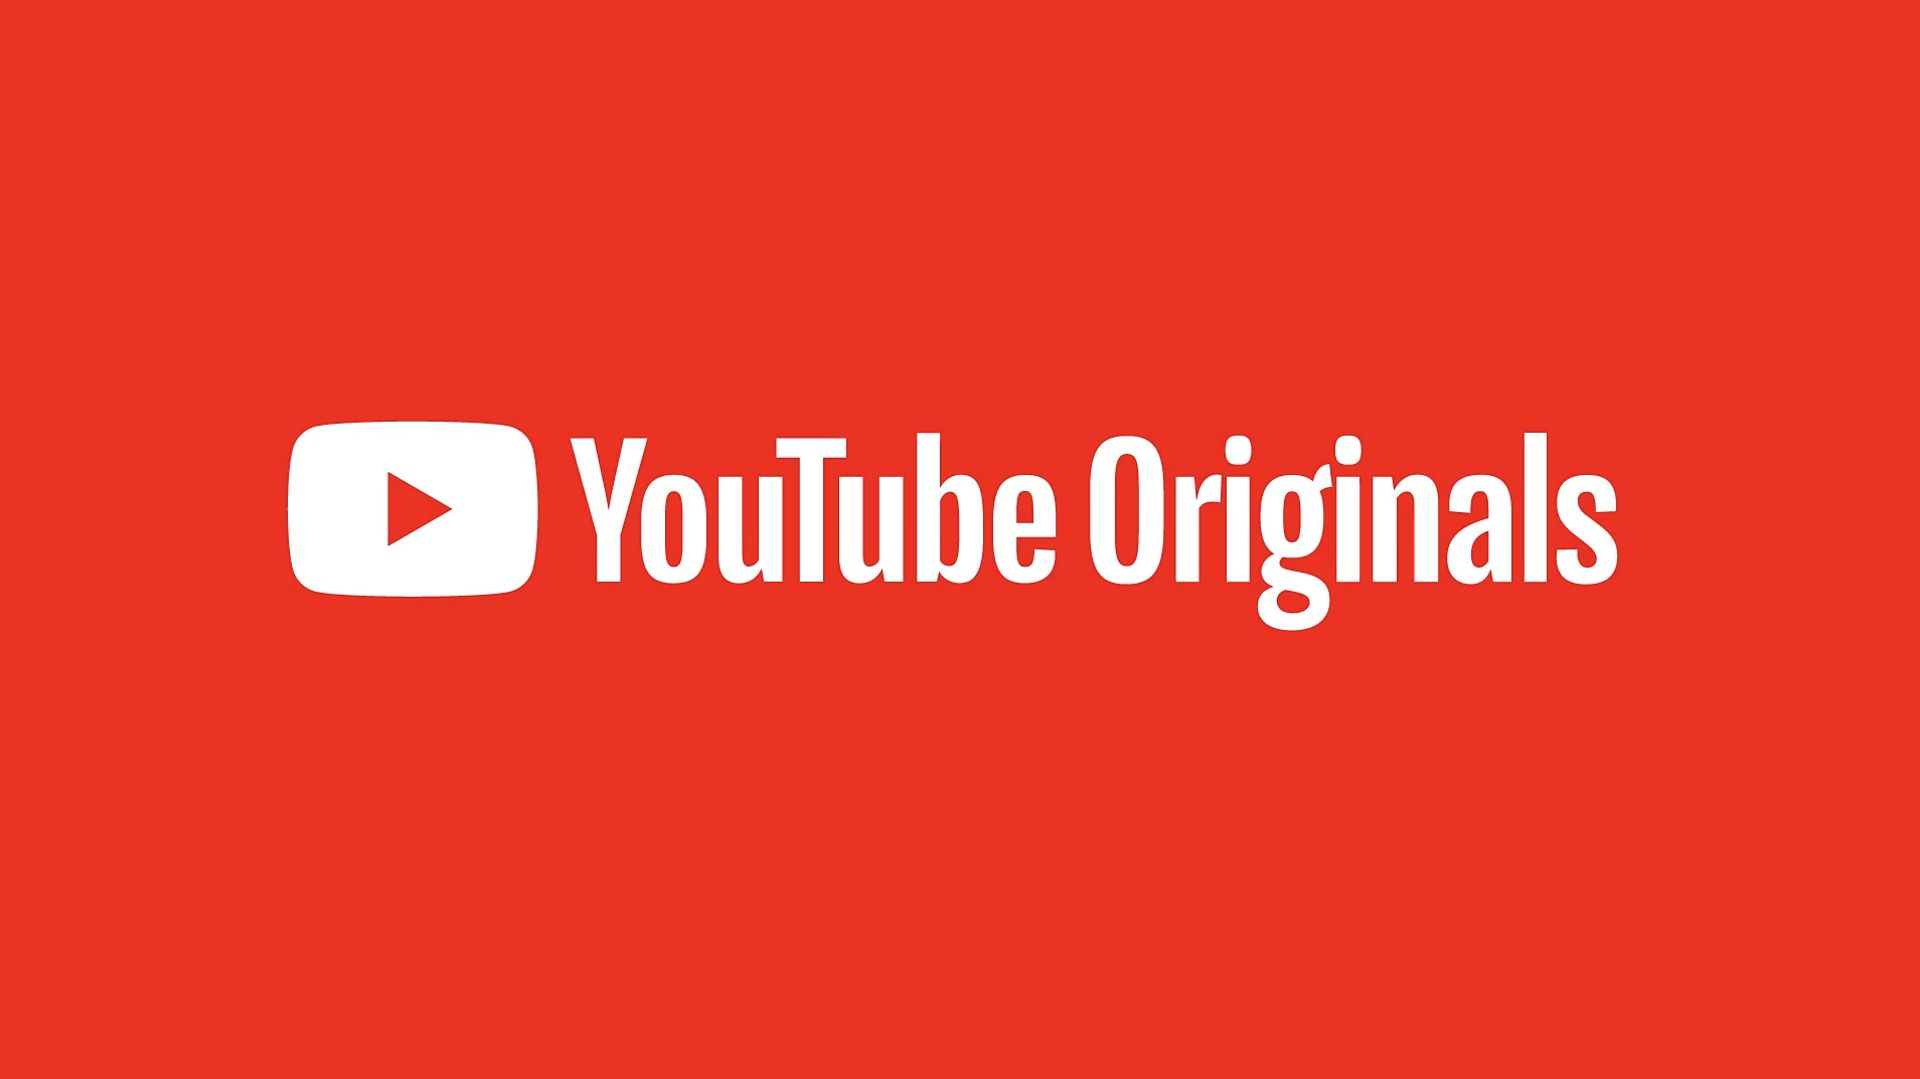 Les séries YouTube Originals seront bientôt disponibles gratuitement